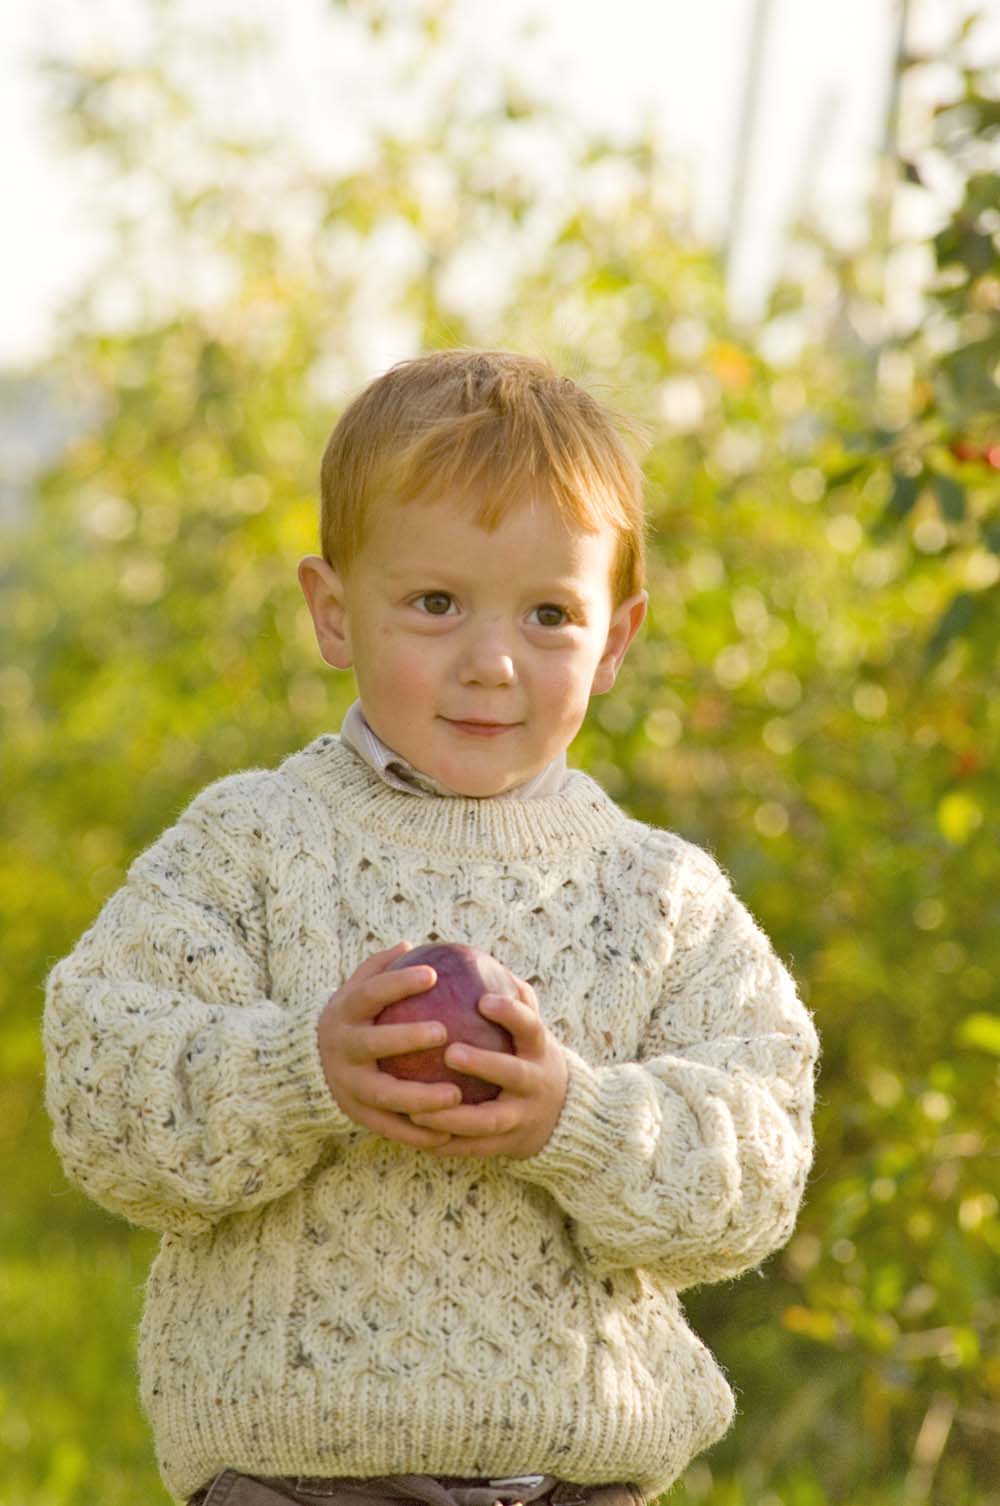 Boy holding apple